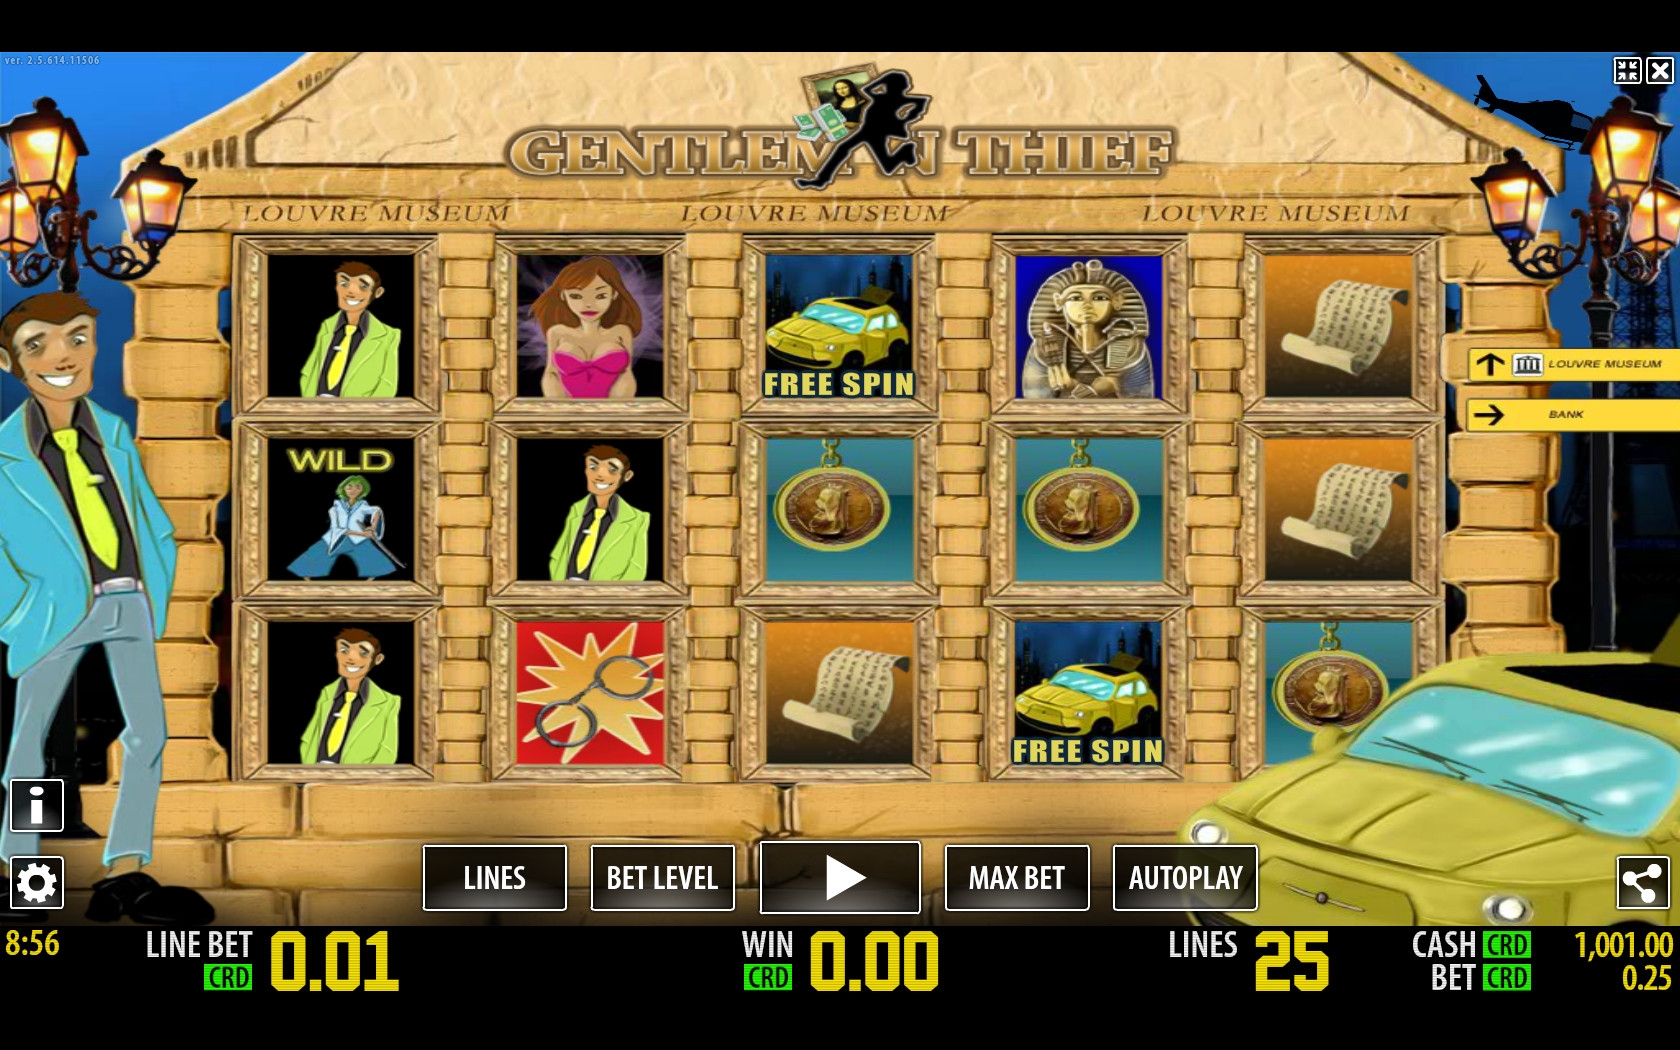 Gentleman Thief (Gentleman Thief) from category Slots